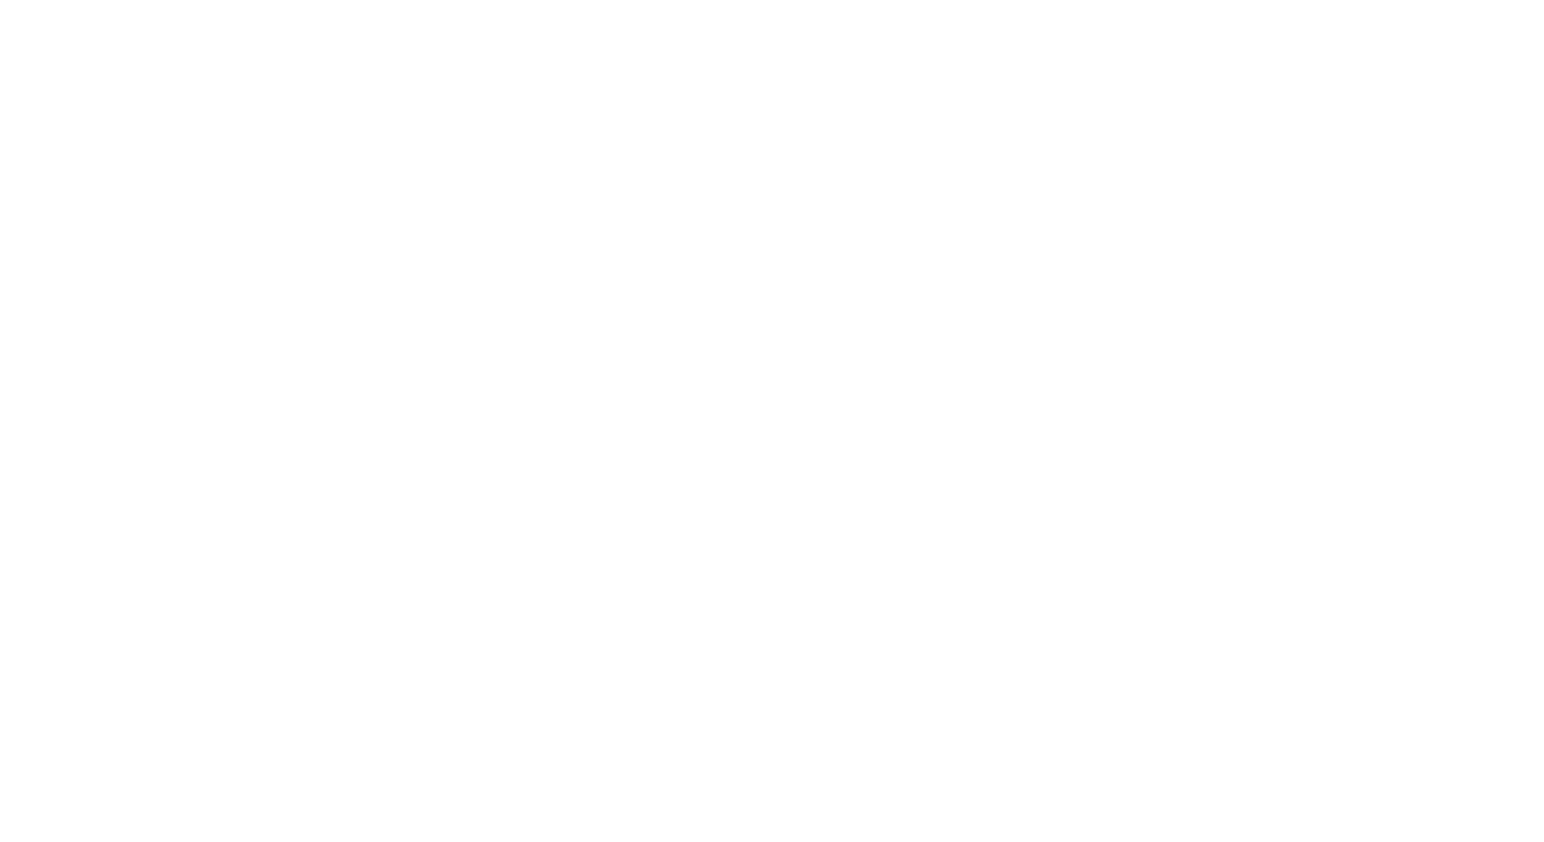 Pieris Pharmaceuticals logo large for dark backgrounds (transparent PNG)